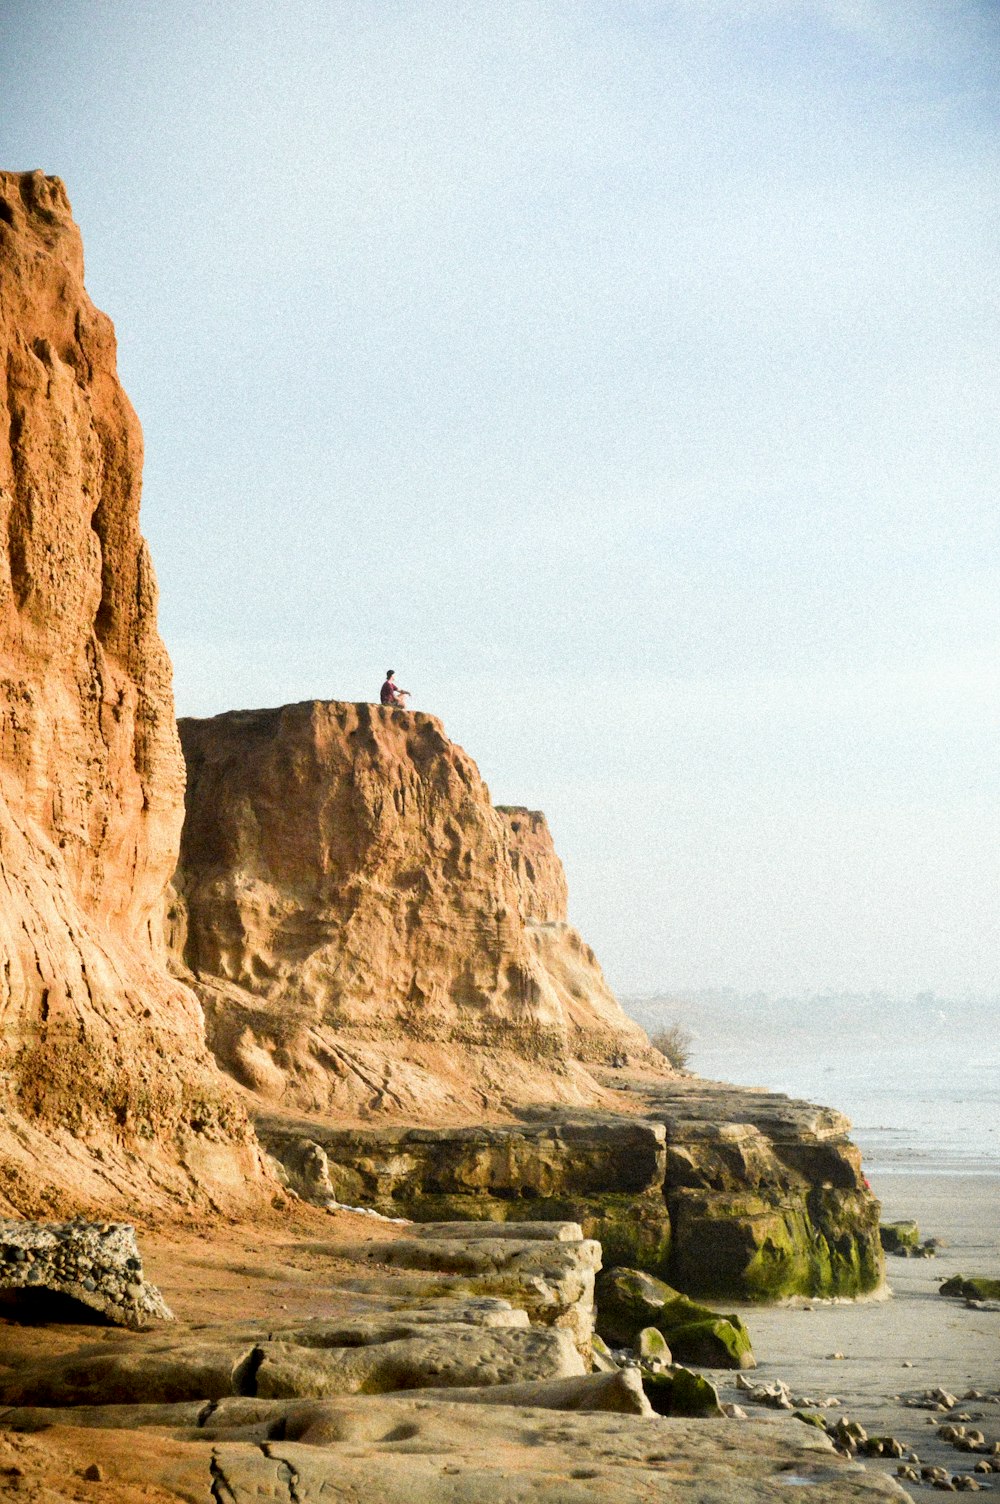 man on cliff near water